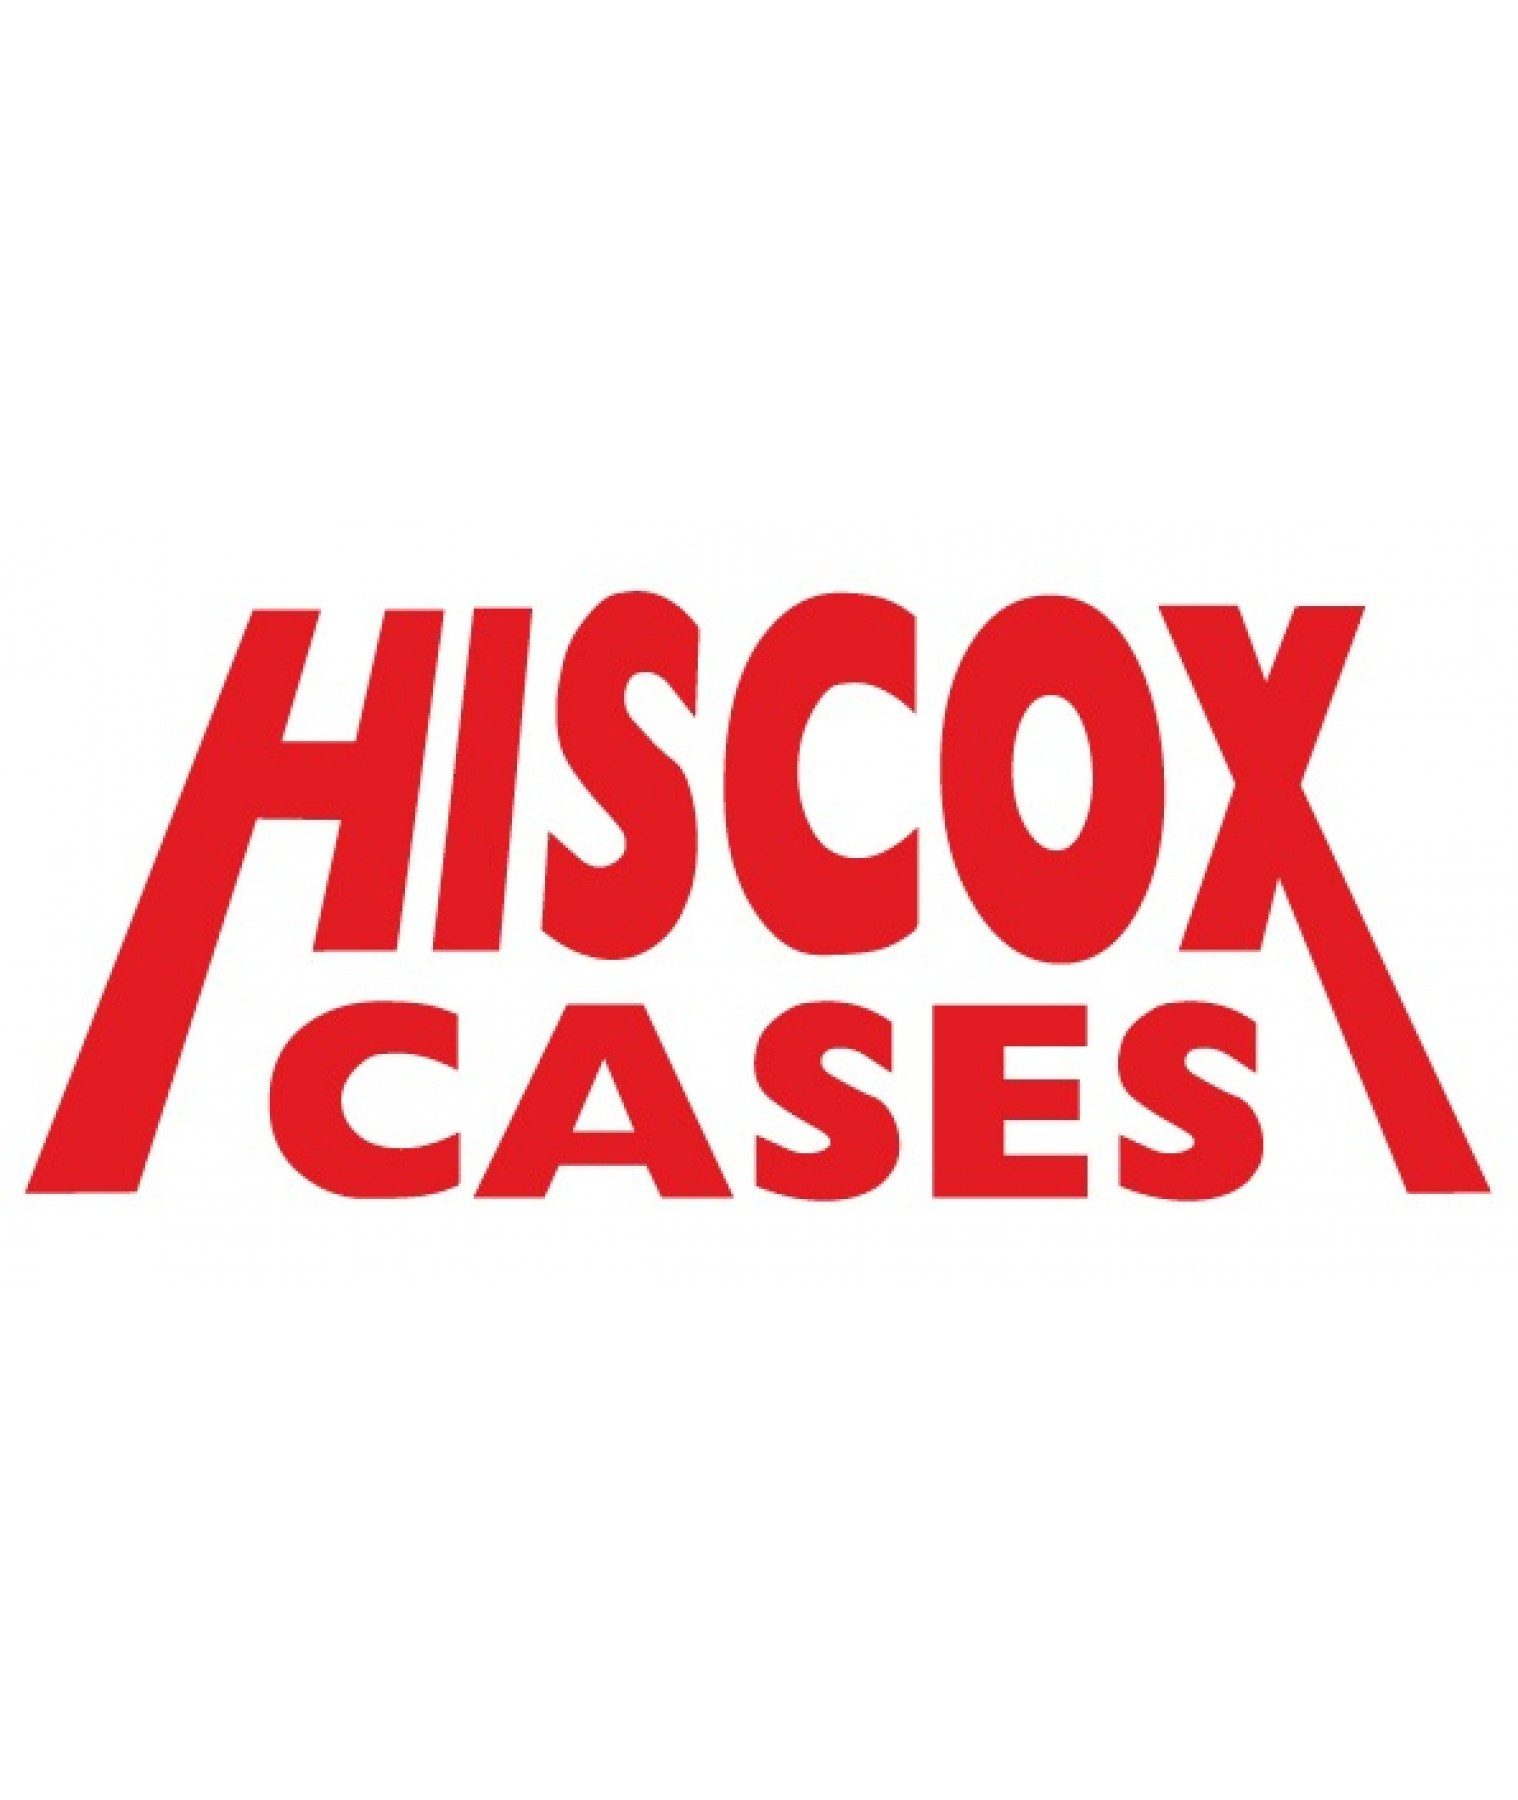 HISCOX